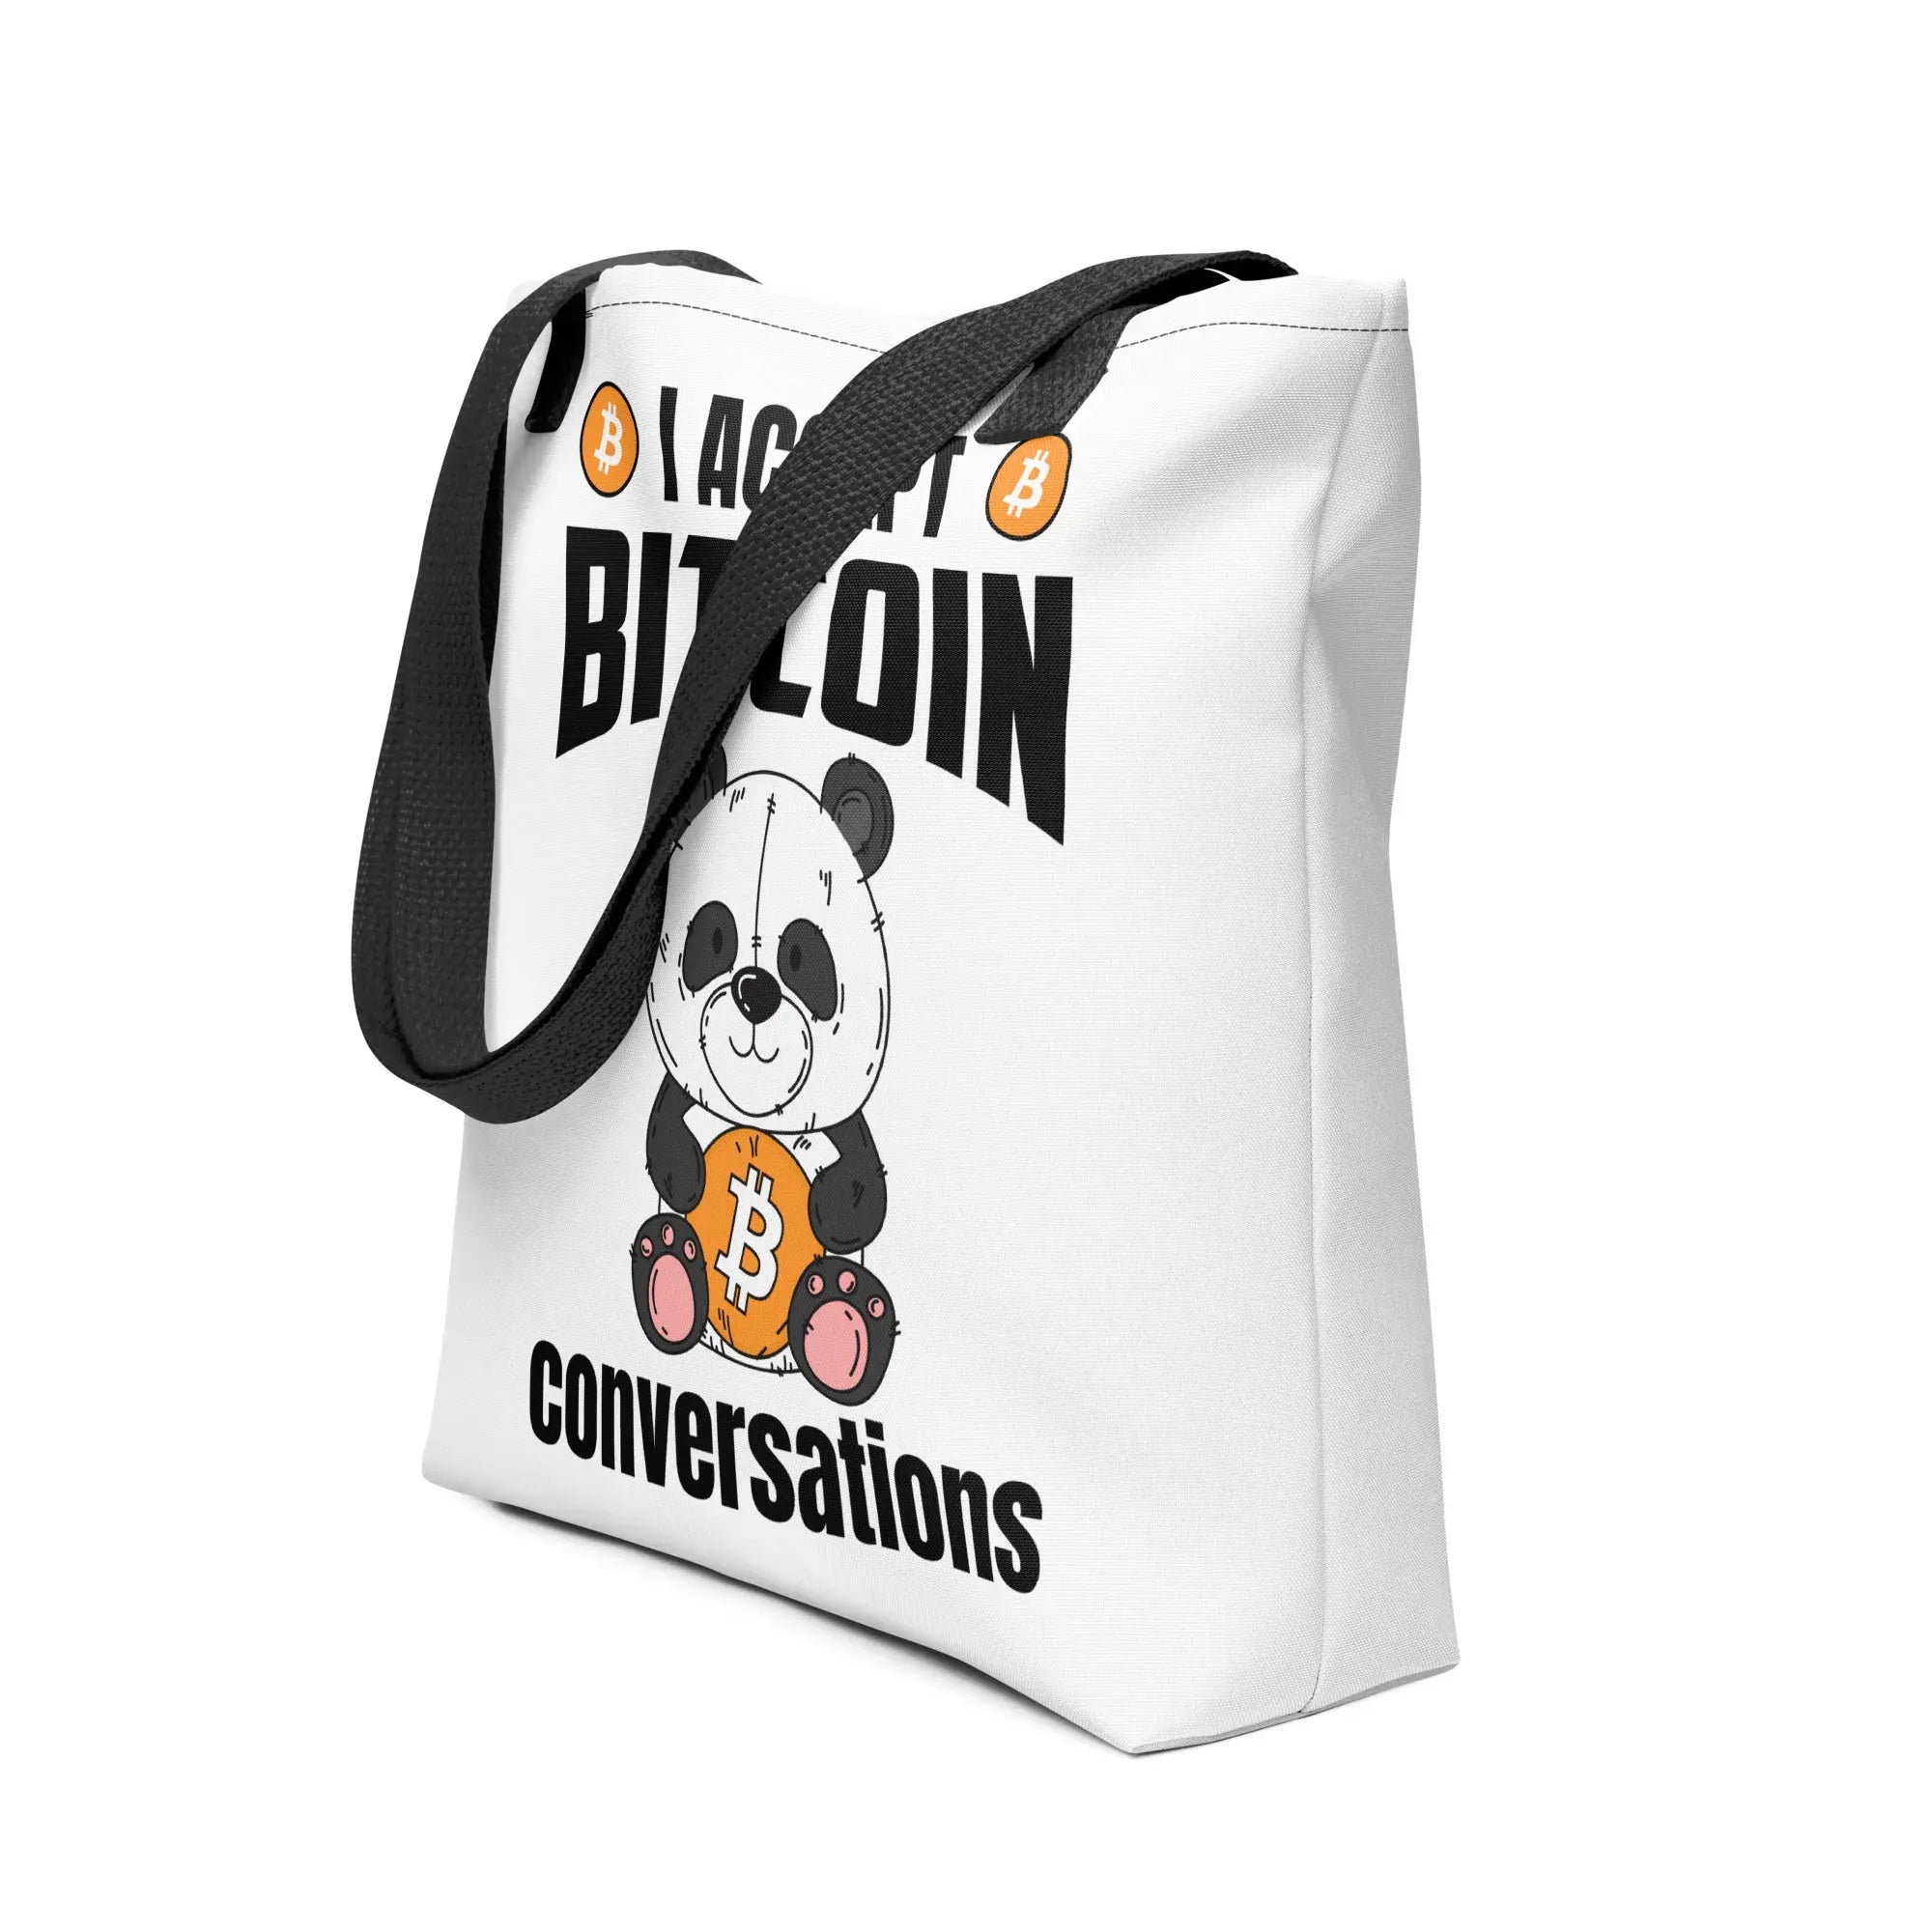 Bitcoin bag - Free business icons